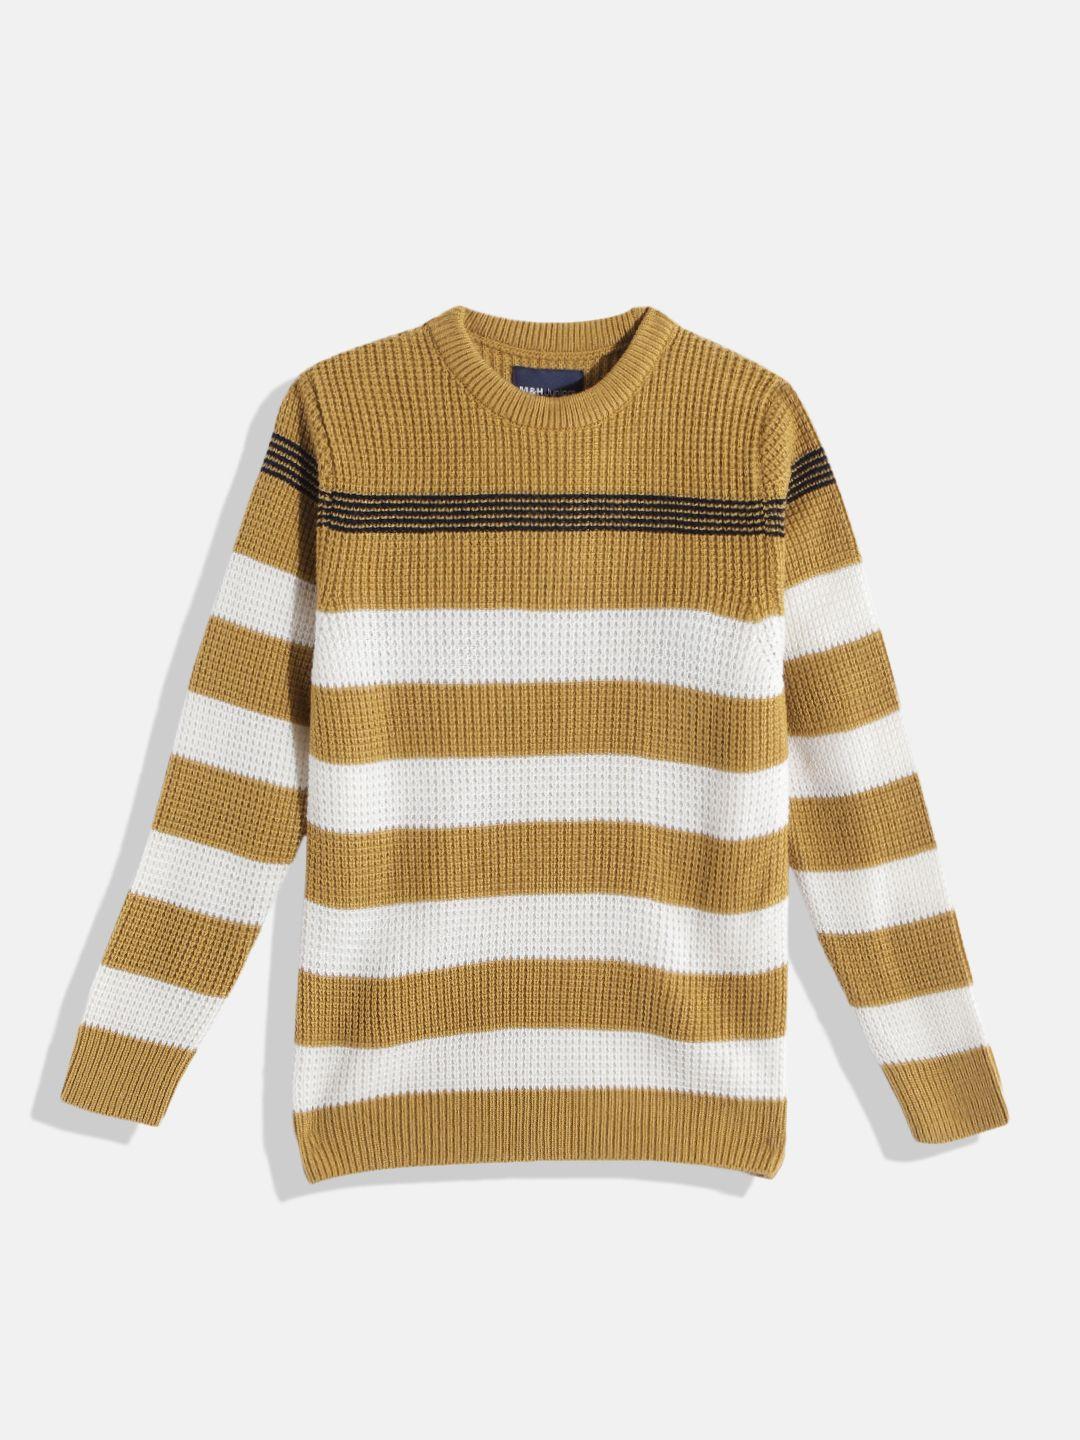 m&h-juniors-boys-mustard-&-white-striped-pullover